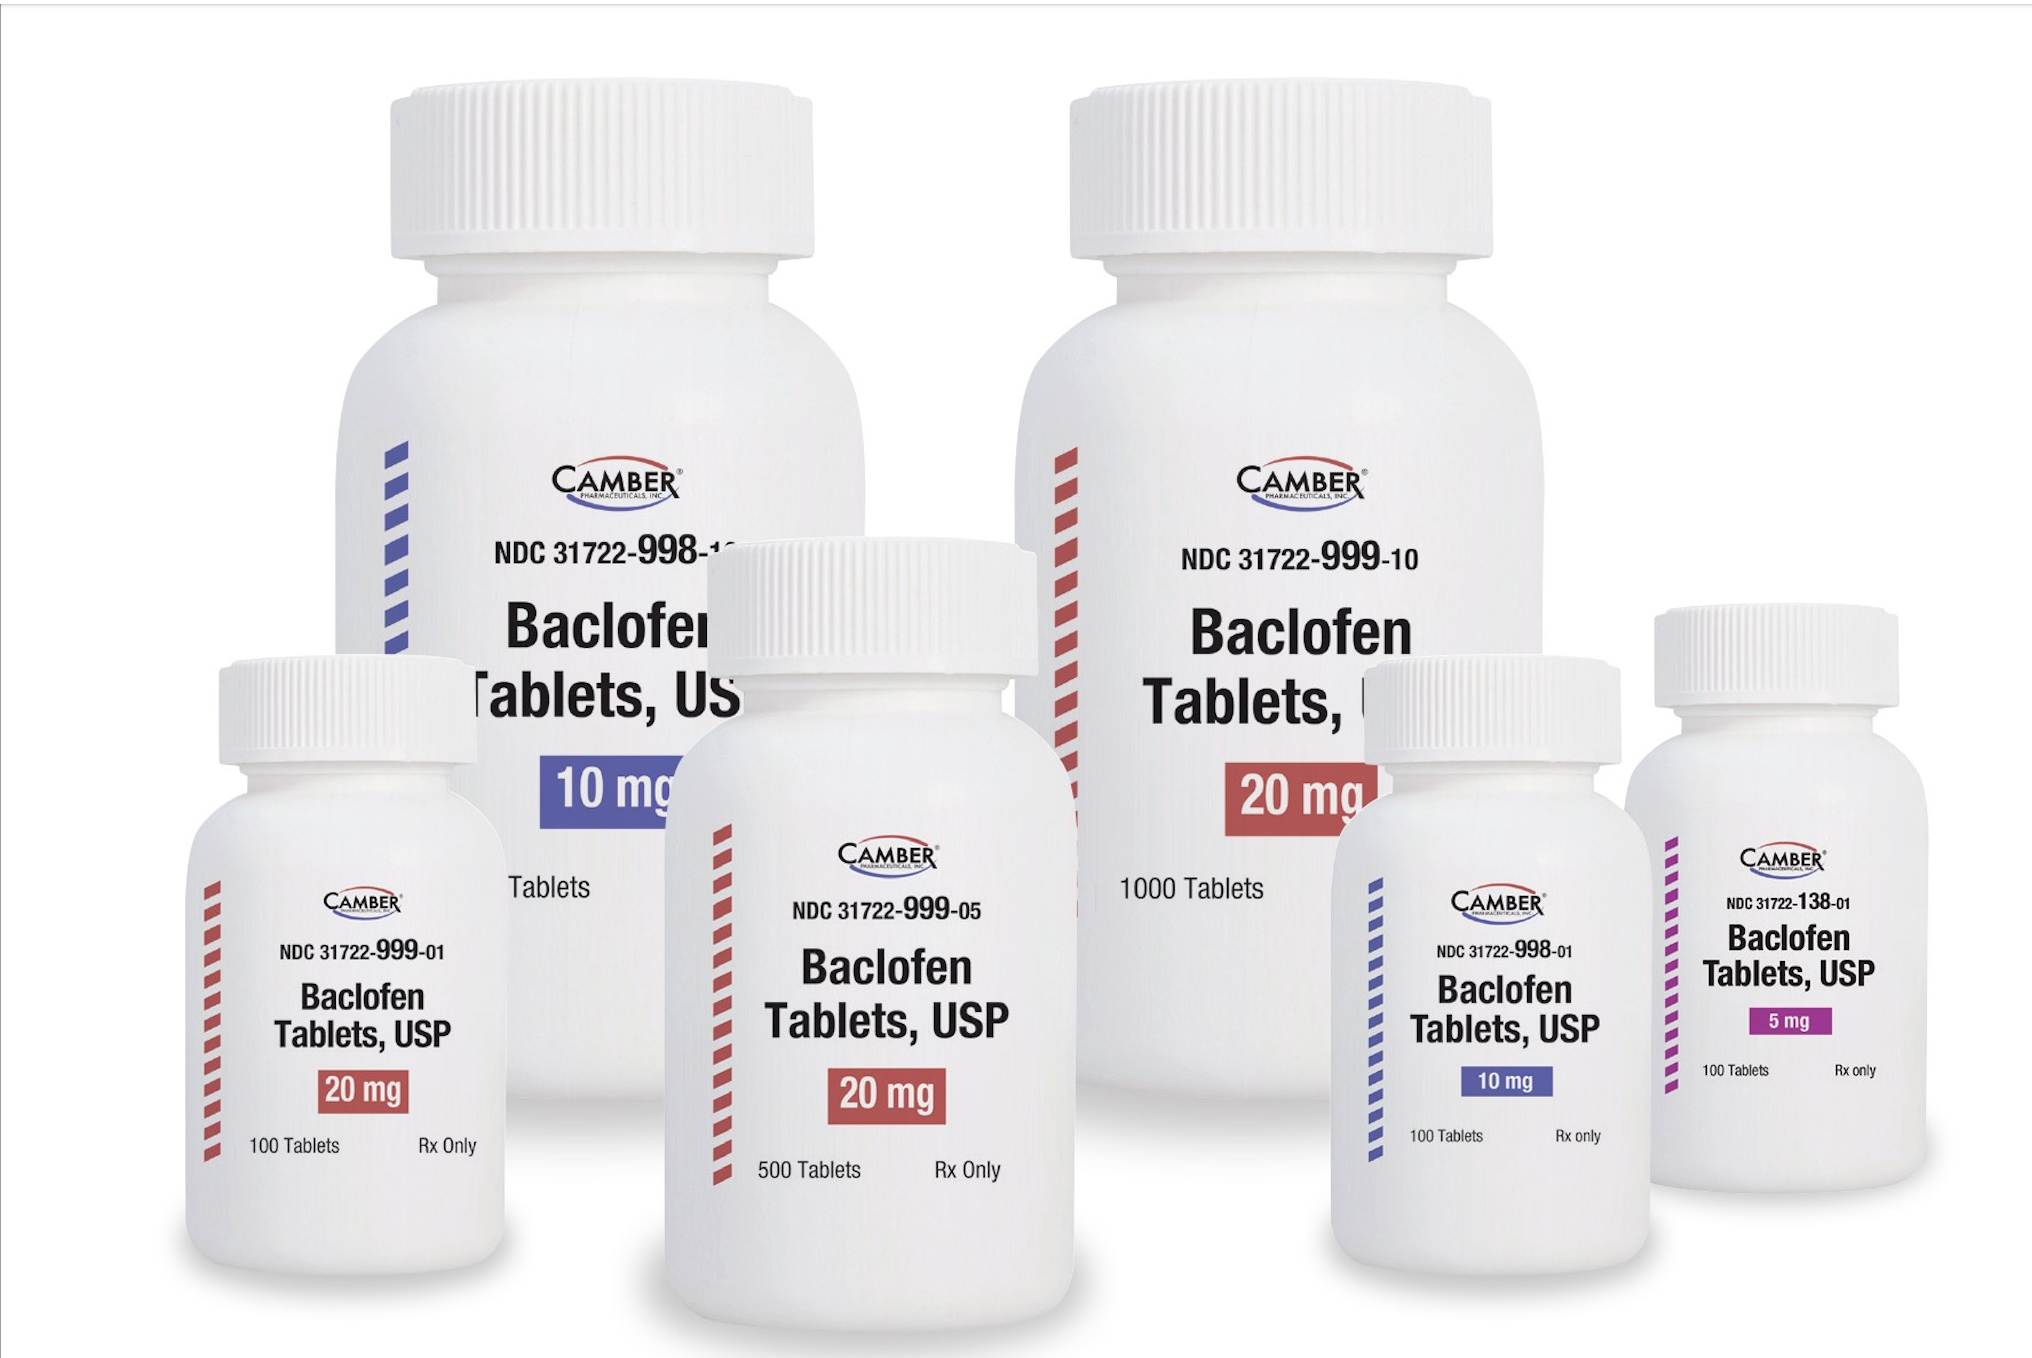 Camber Adds 5 mg Strength to Their Baclofen Portfolio